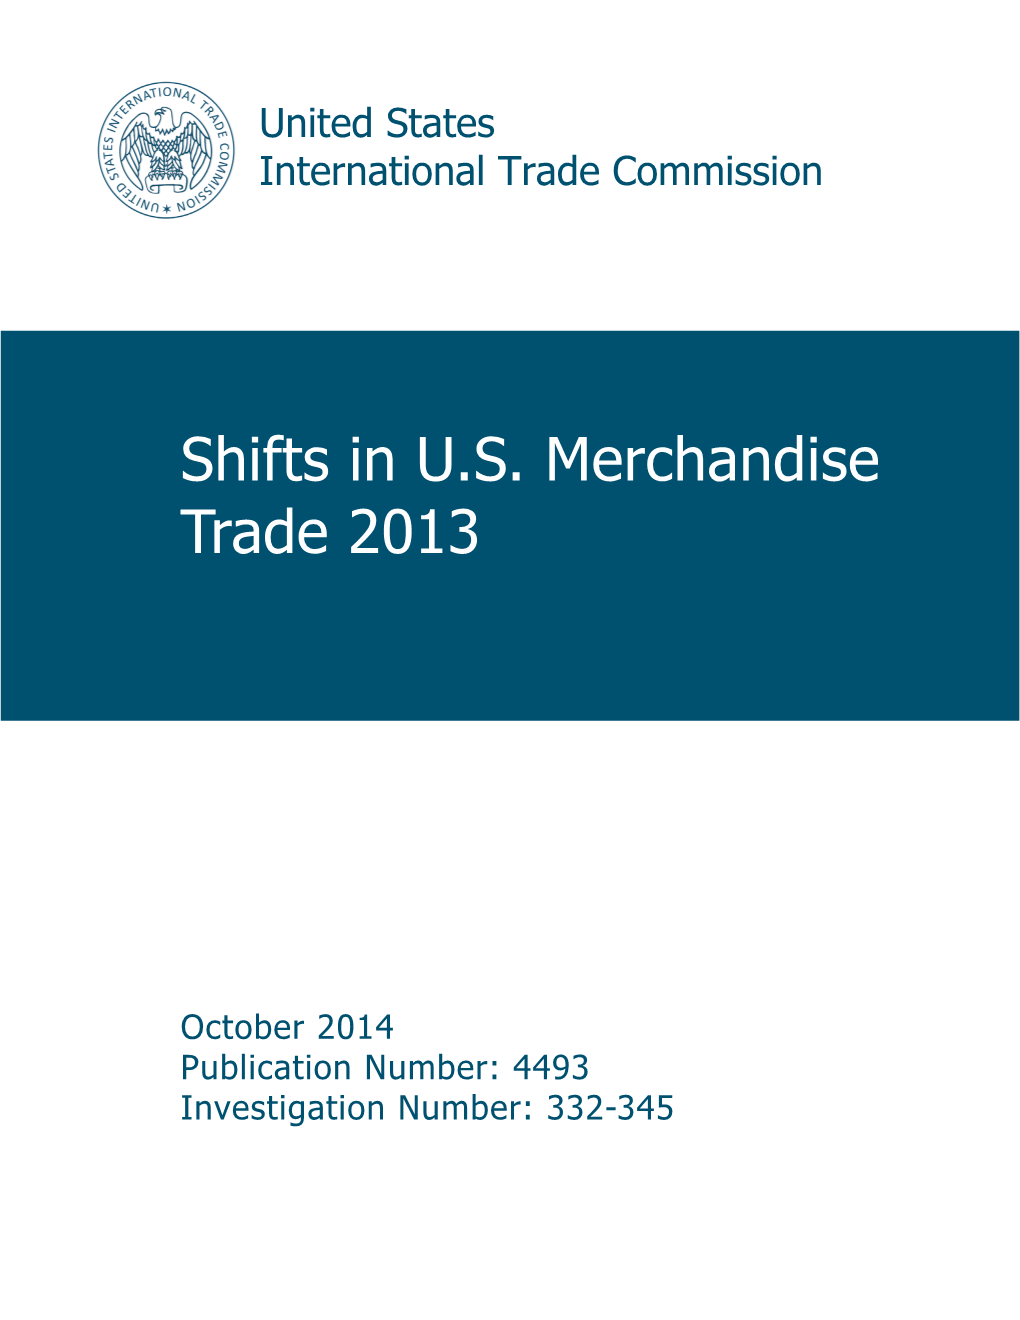 Shifts in U.S. Merchandise Trade 2013